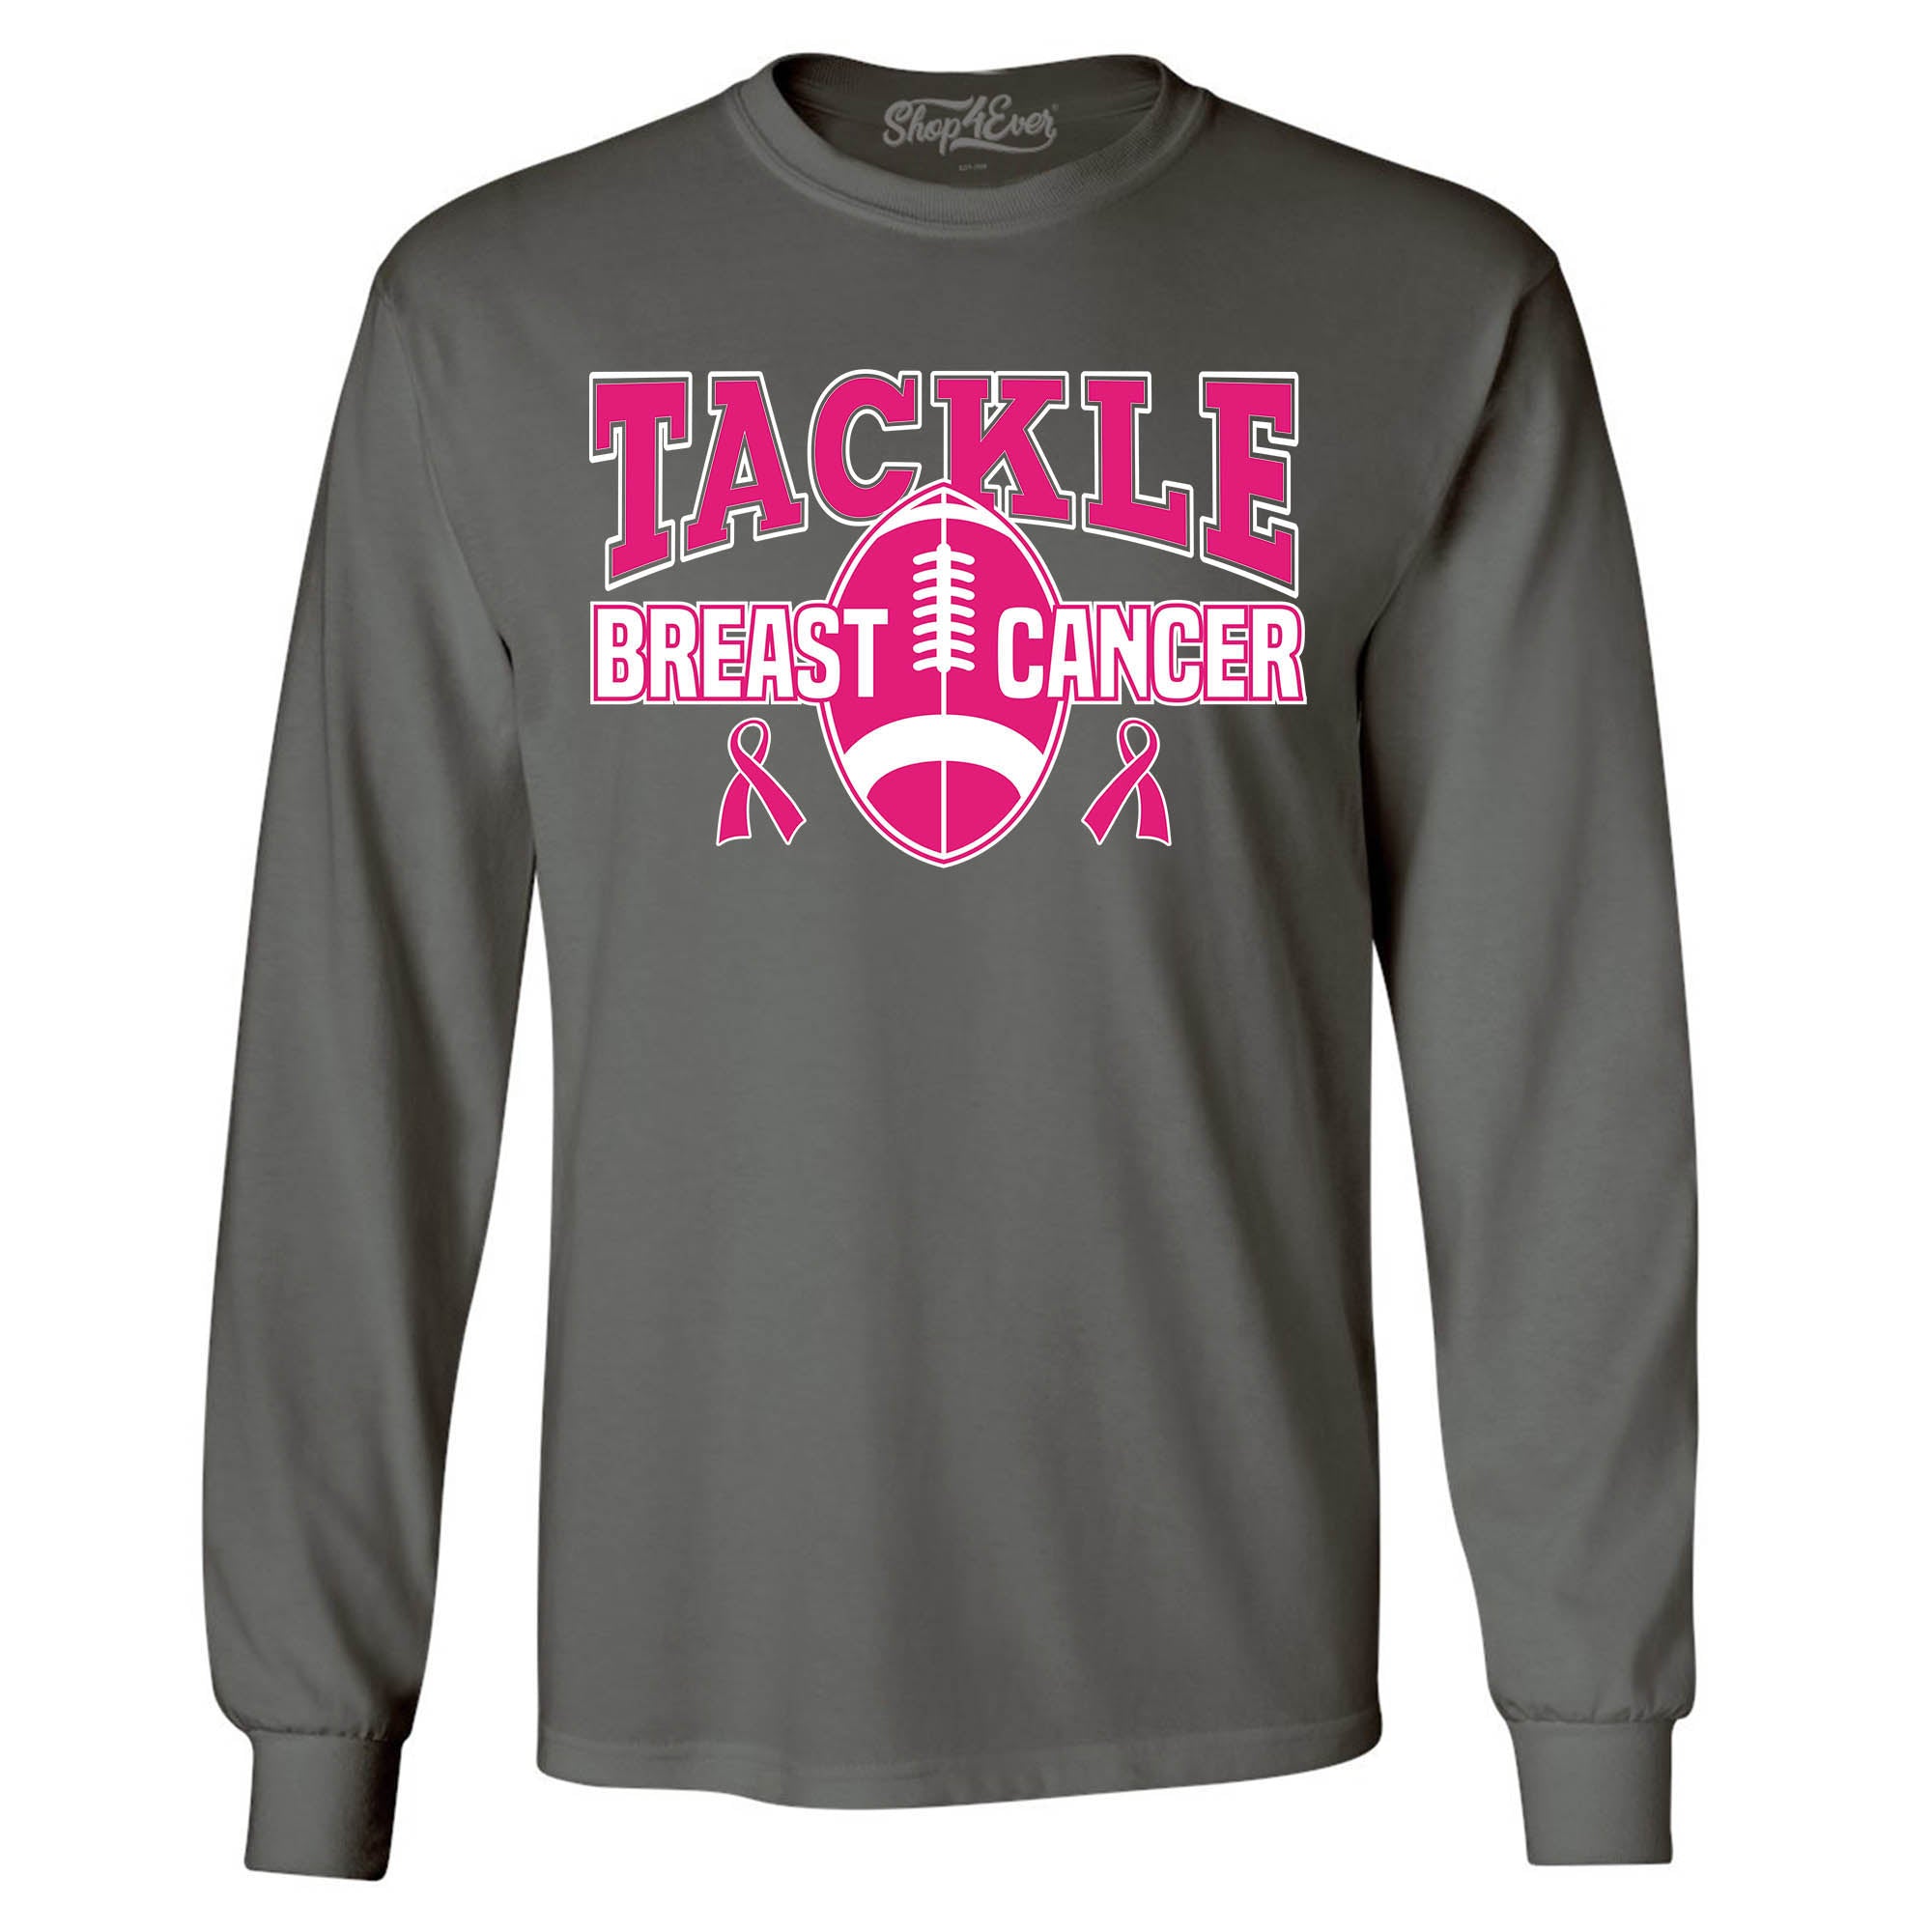 Tackle Breast Cancer Awareness Long Sleeve Shirt